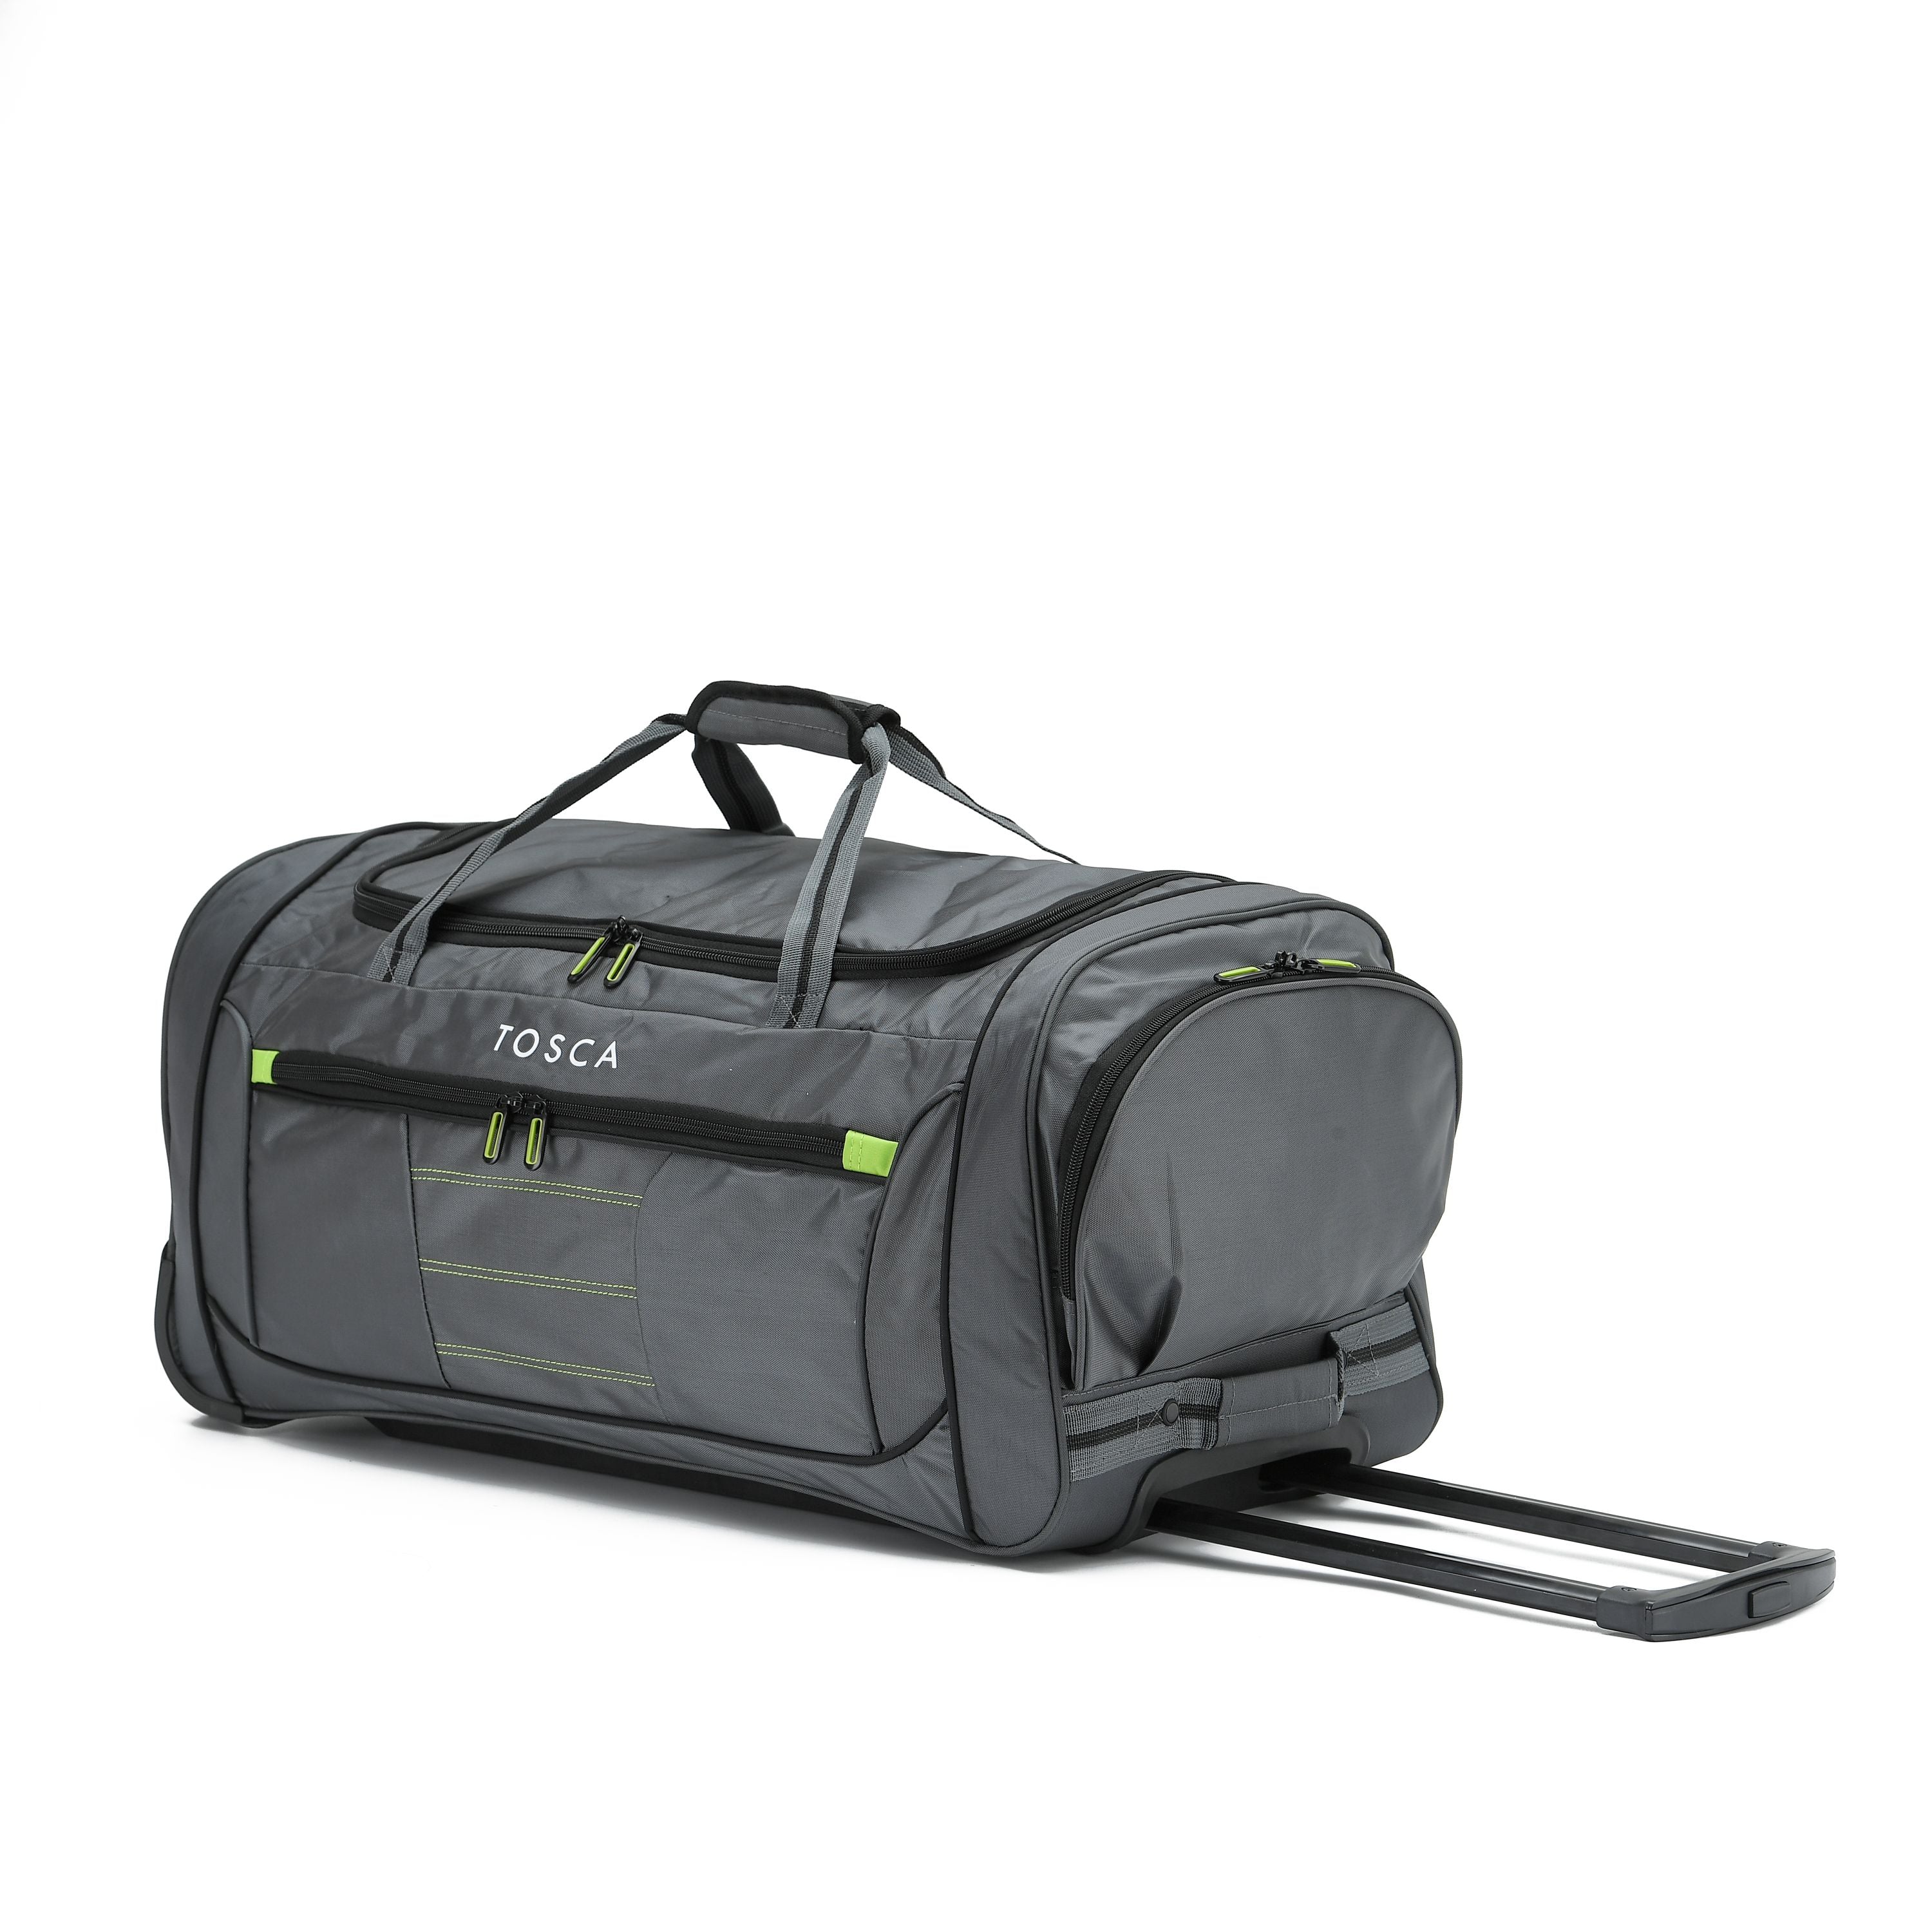 Tosca - TCA794TW/MB 70cm Medium Wheeled Duffle Bag - Grey/Lime-2